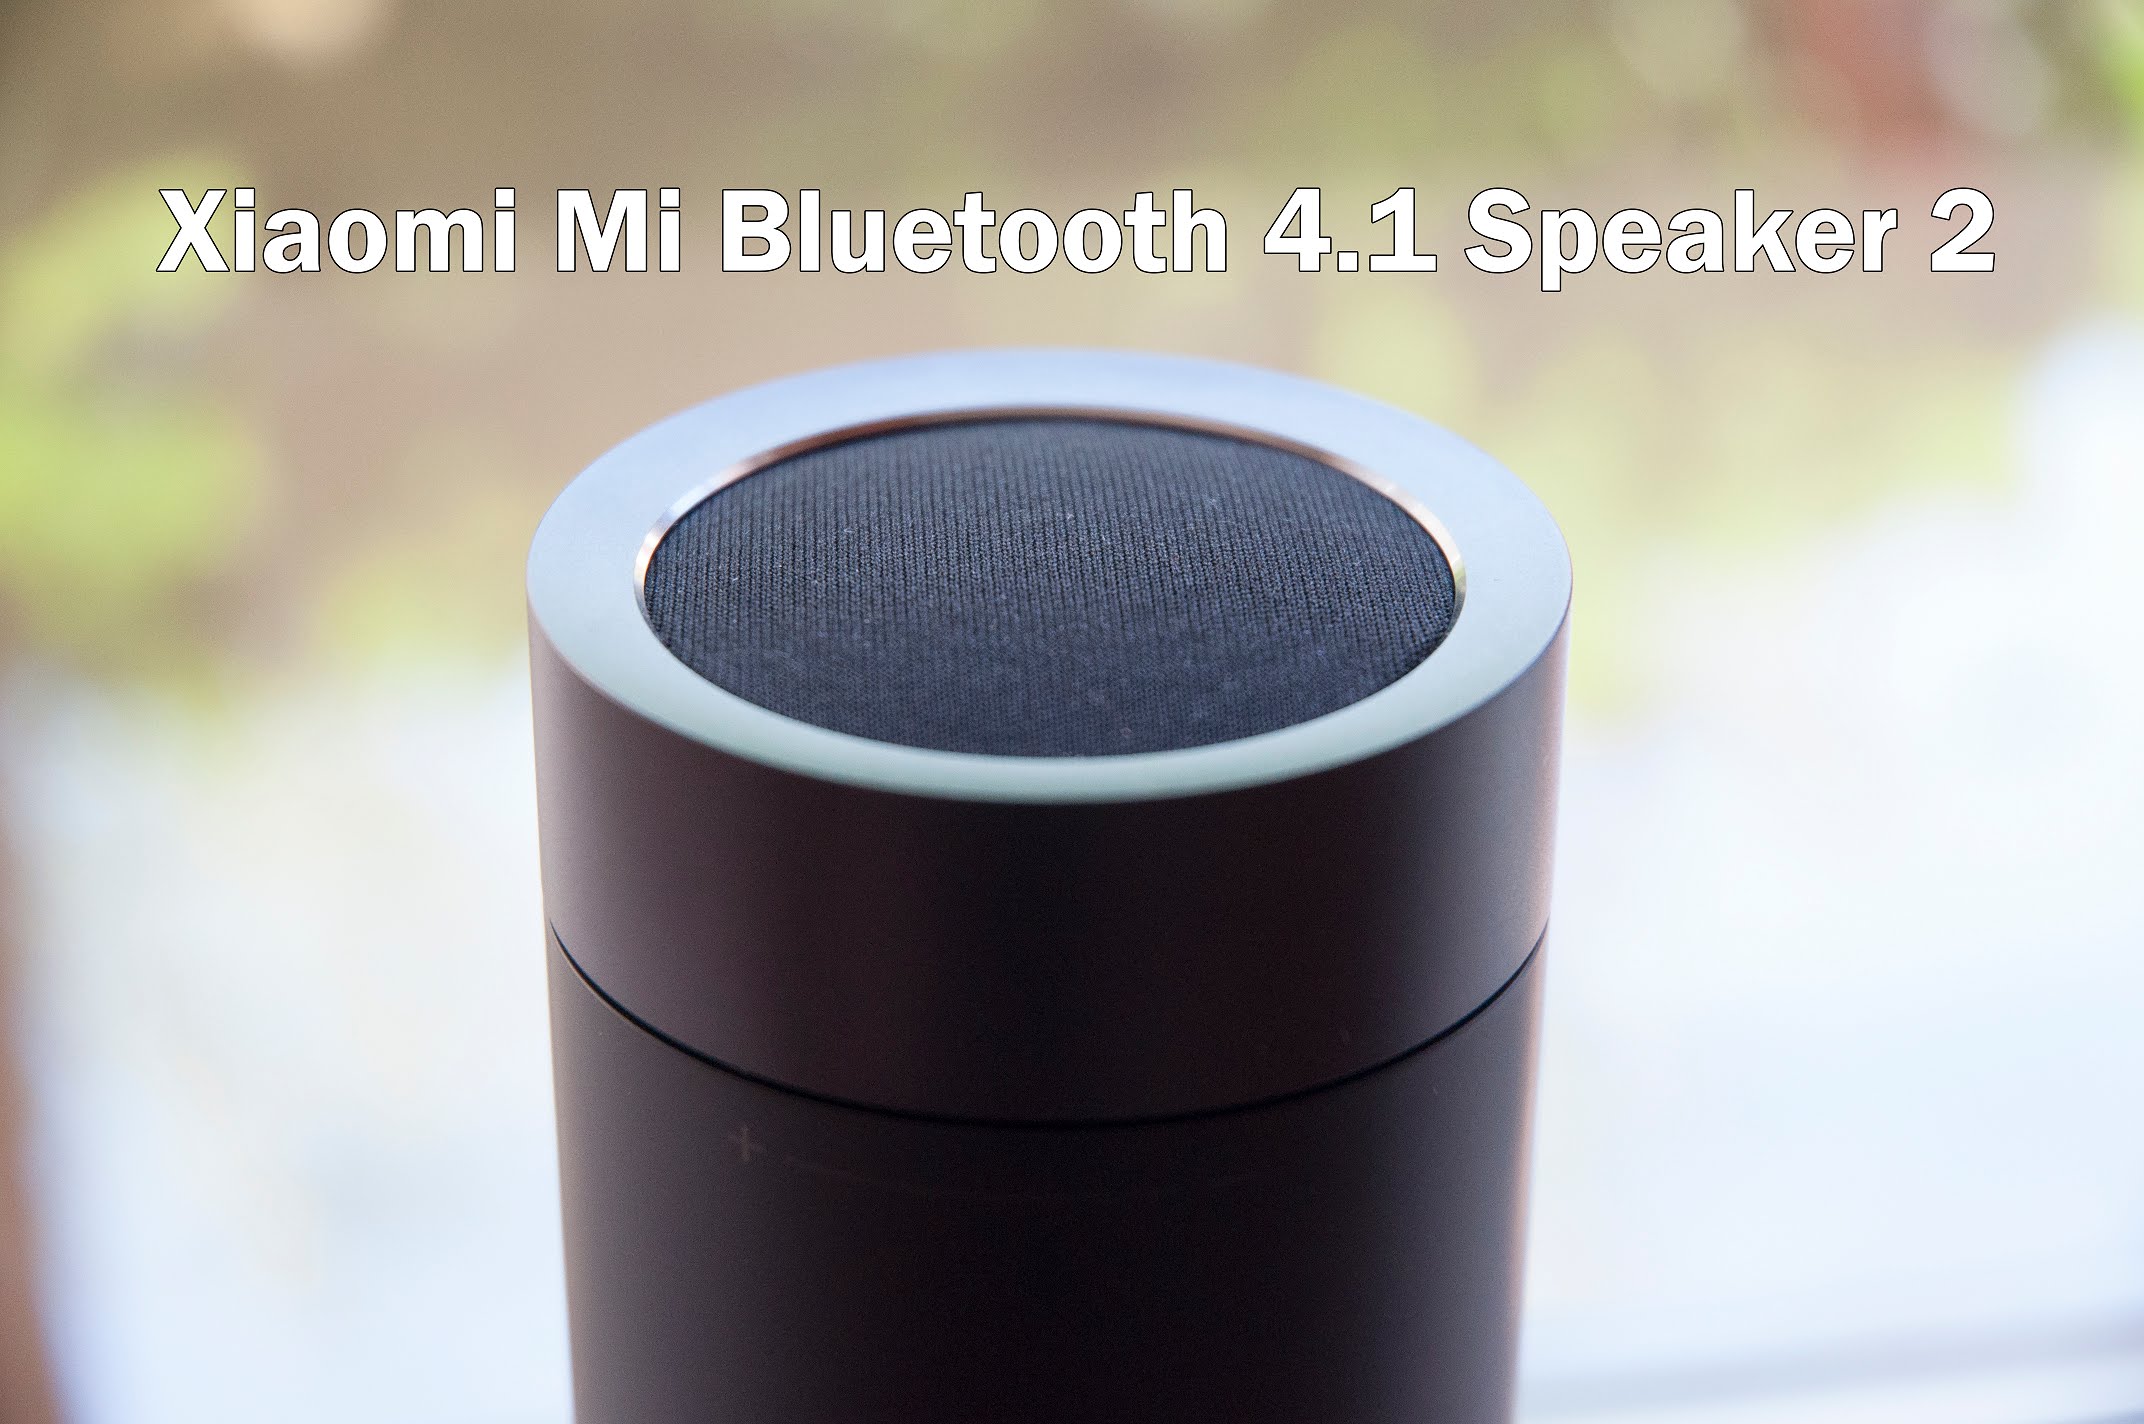 Xiaomi pocket bluetooth speaker